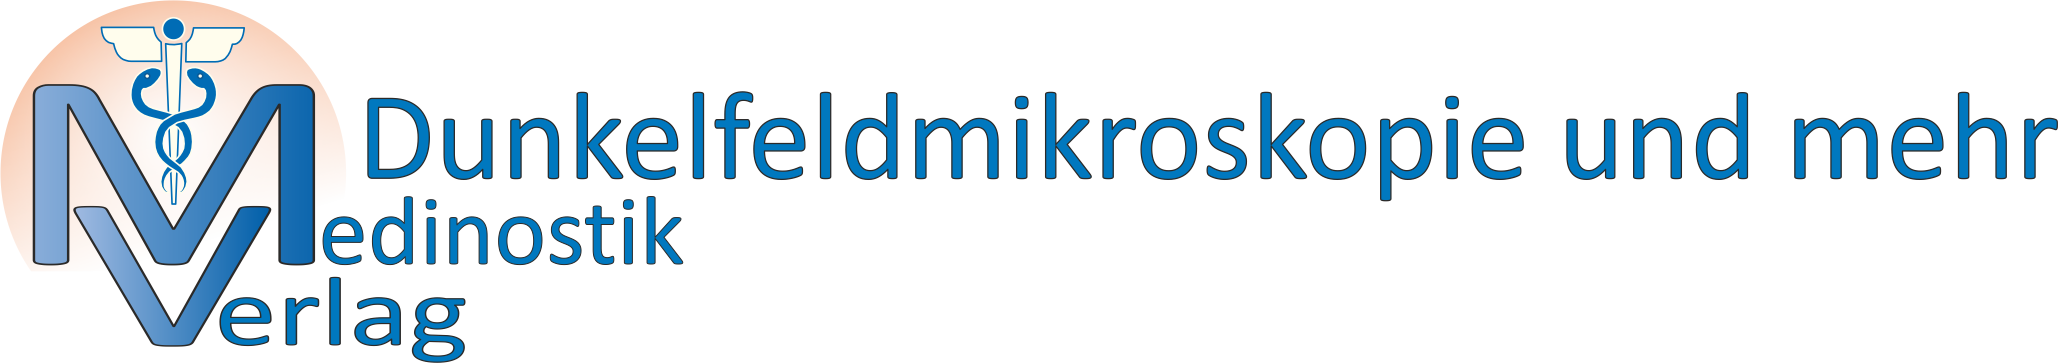 Medinostik-Verlag Shop-Logo